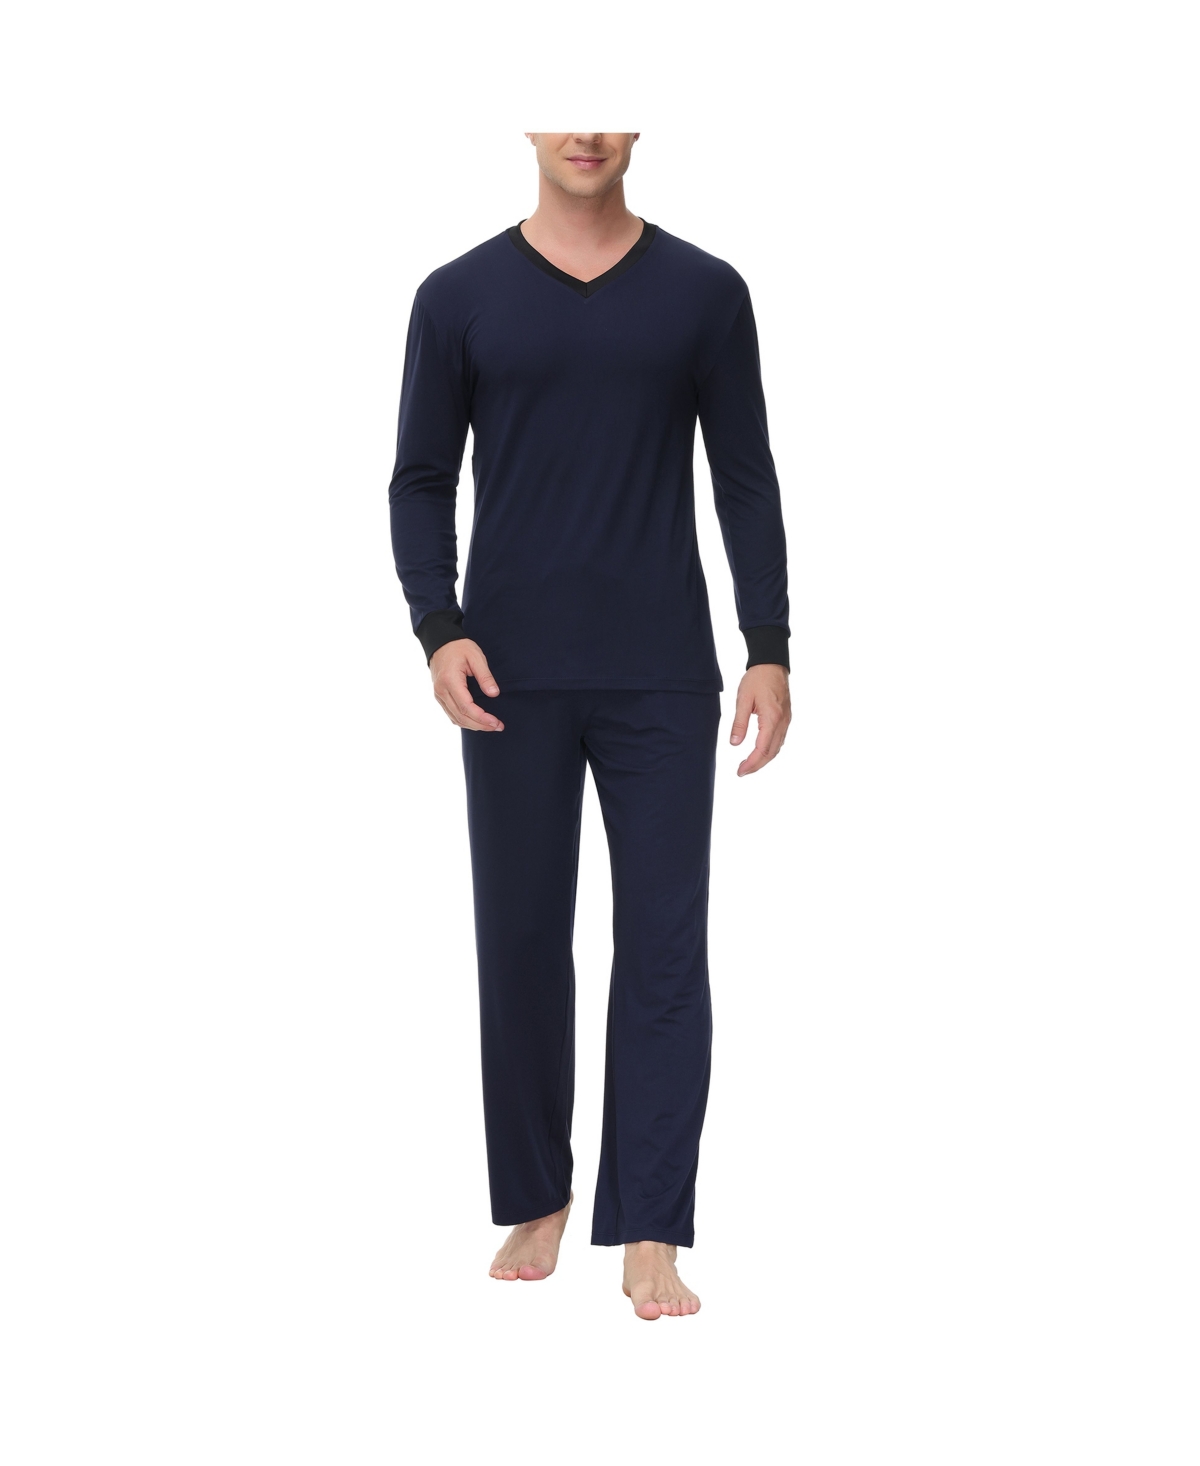 Men's Heat retaining Two Piece V-Neck & Lounge Pants Pajama Set - Light Blue